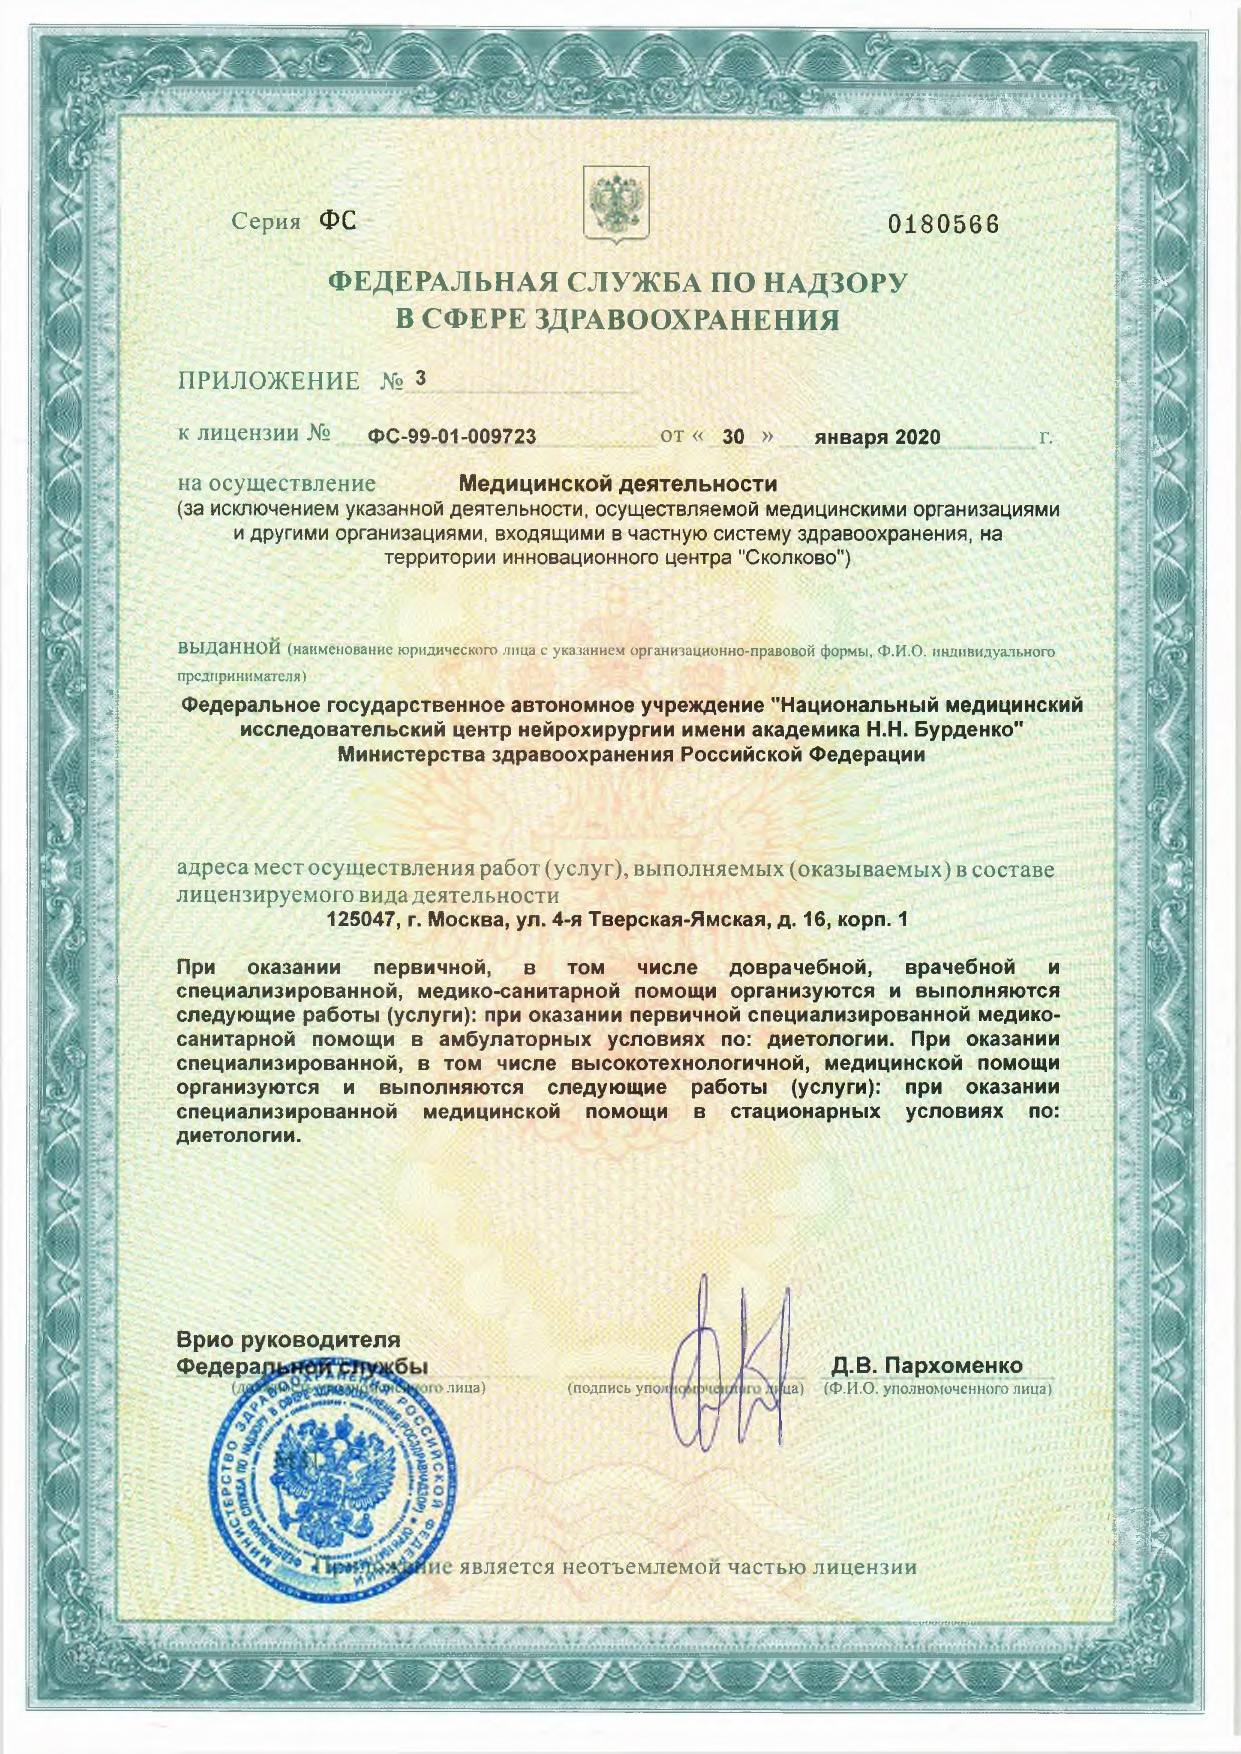 Институт нейрохирургии имени академика Н. Н. Бурденко лицензия №6